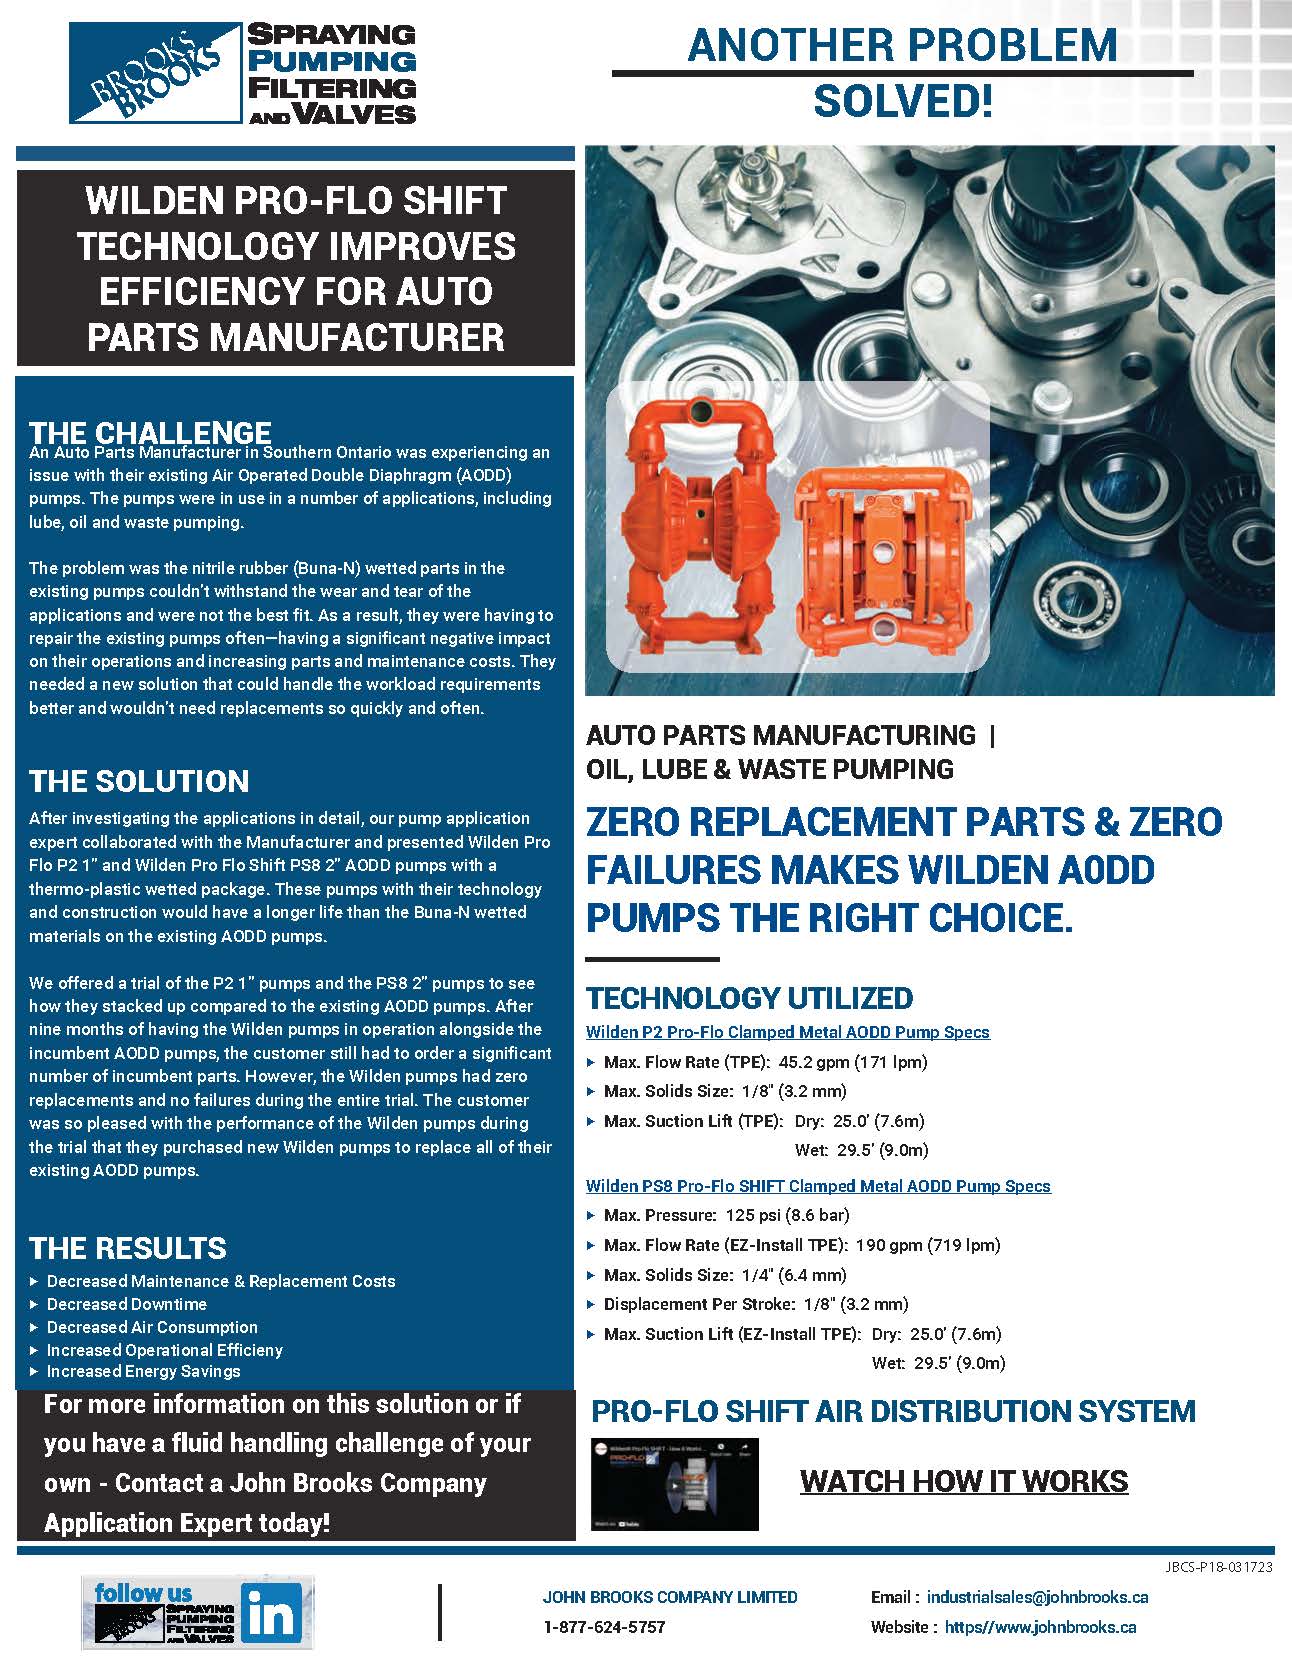 Wilden AODD Pump Technology Improves Efficiency for Auto Parts Manufacturer